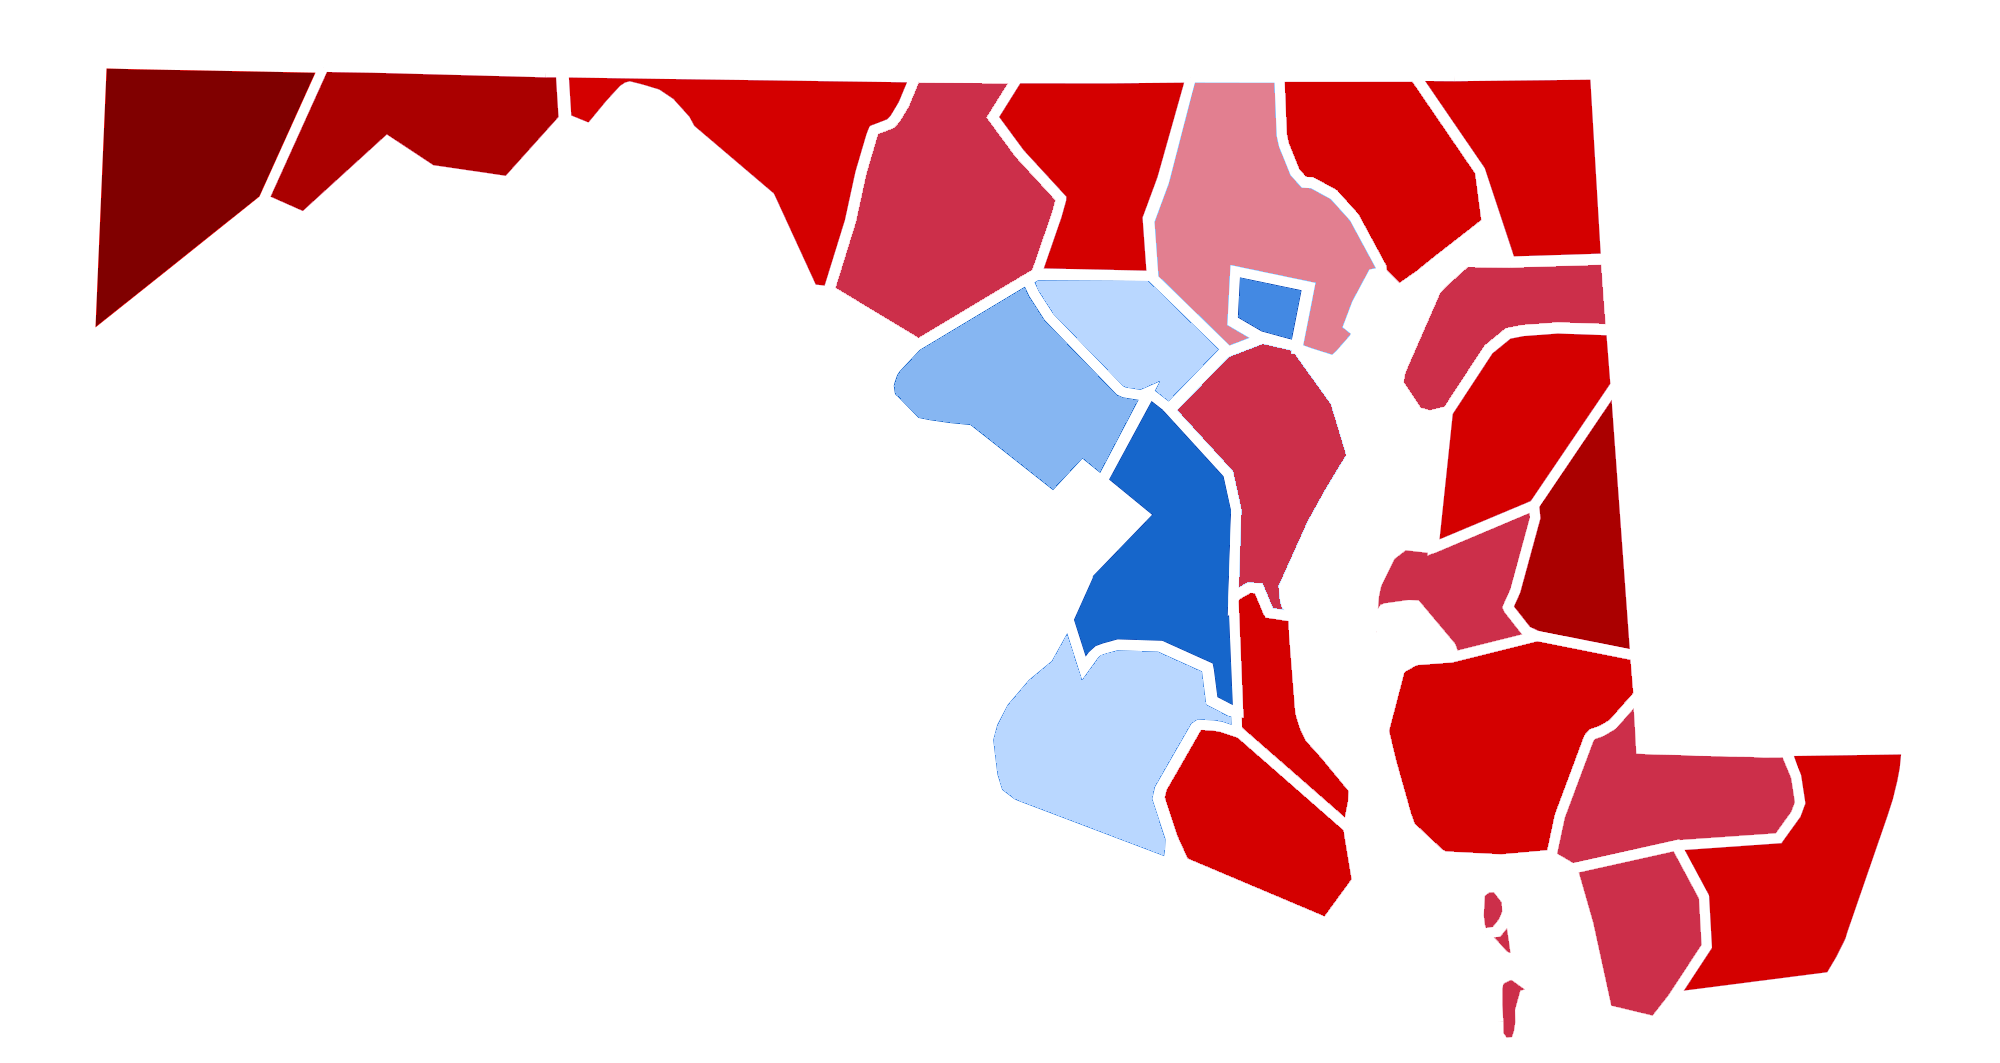 Maryland_Presidential_Election_Results_2016_Republican_Landslide_15.06%.png